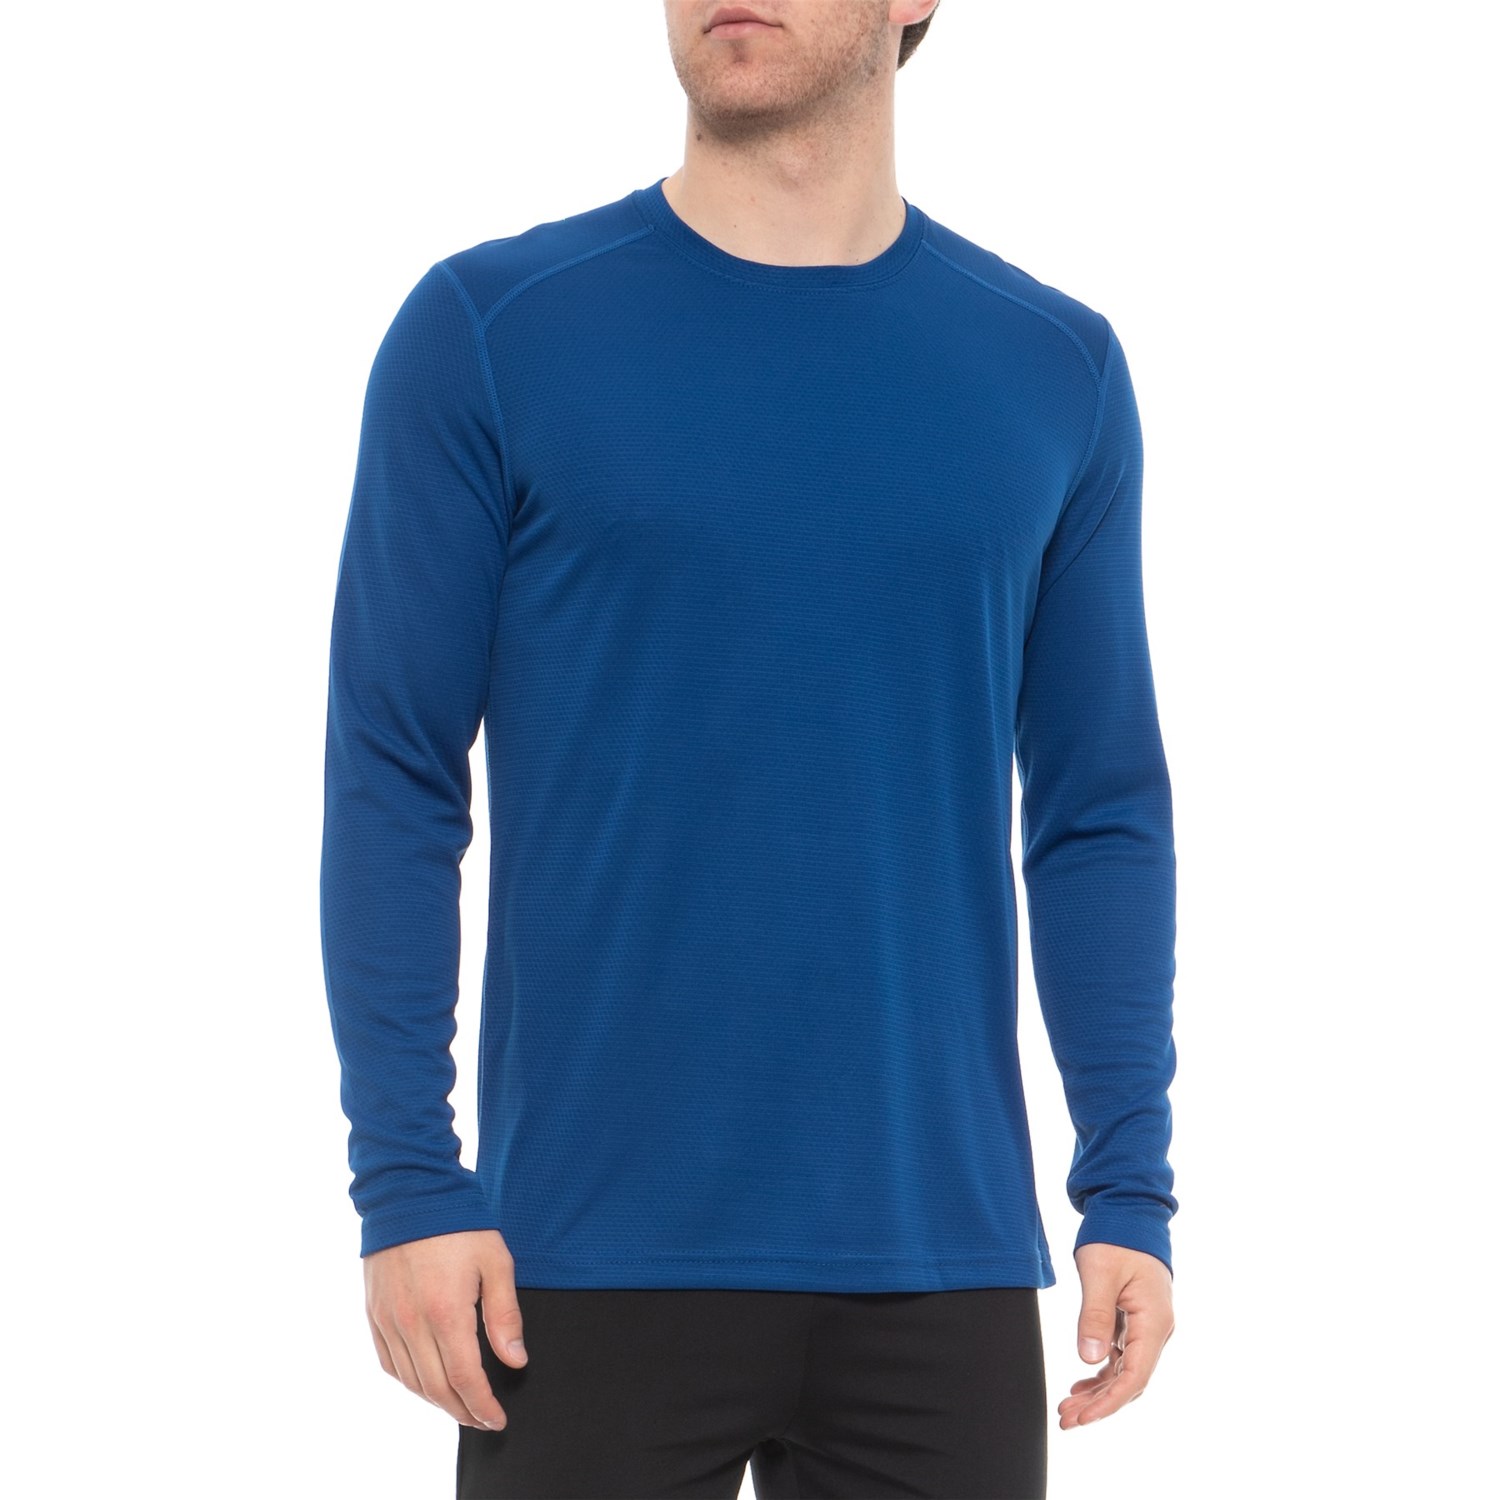 Terramar Indigo Helix Mountain Shirt – UPF 25+, Long Sleeve (For Men)